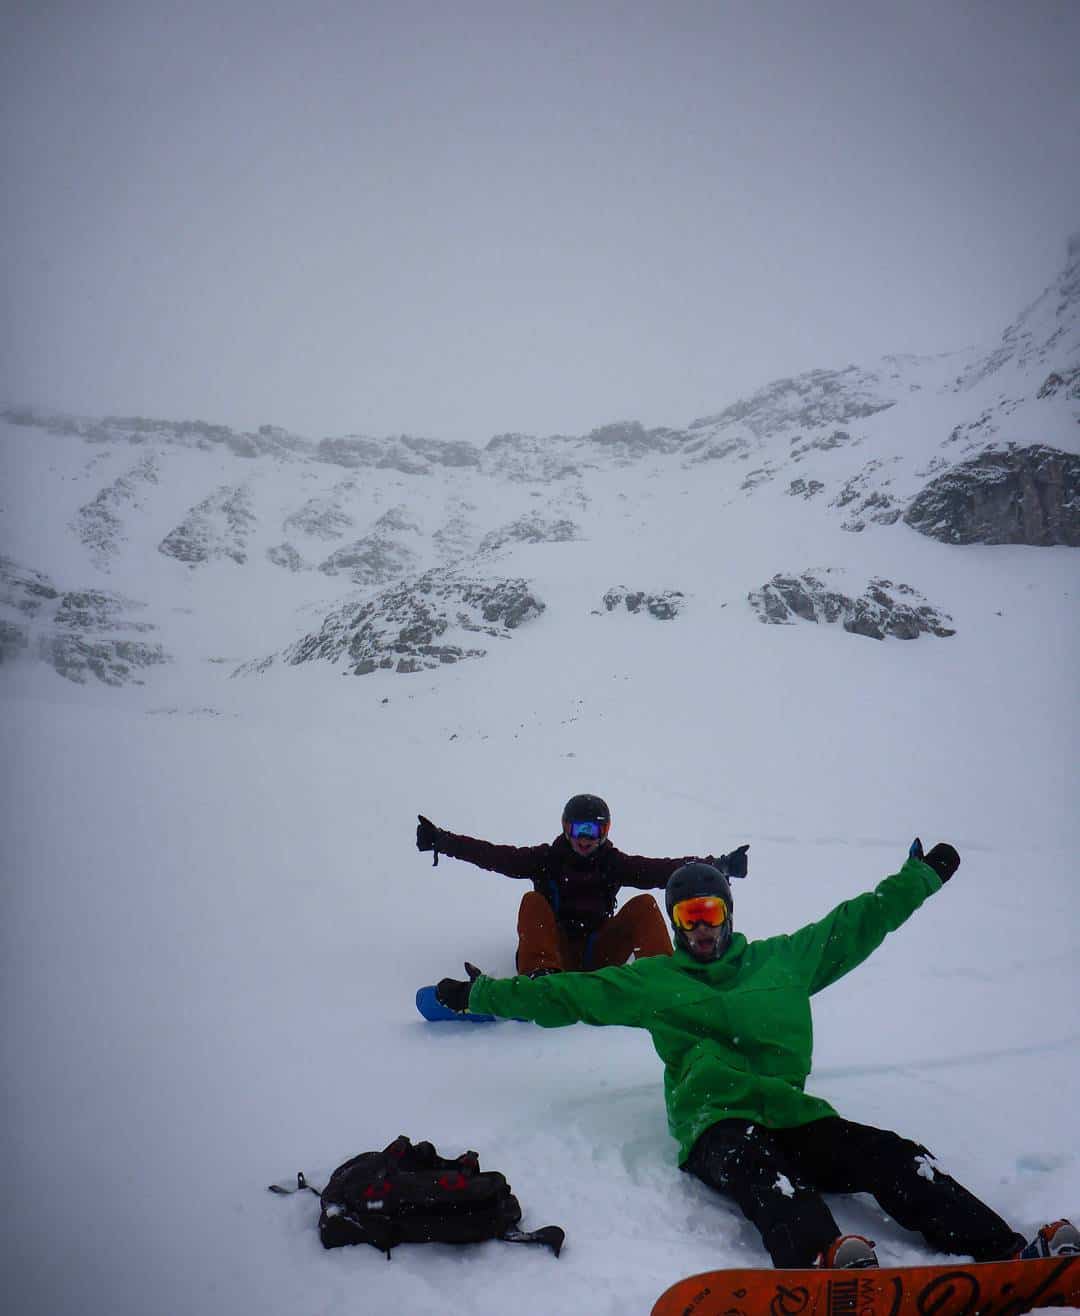 #tbt crazy awesome days shredding the dive with these two lovely people - the stoke was high this day 
.
.
.
.
.
#shredtheshine #isthediveopenyet #deliriumdive #skiing #snow #ssv #guidemebanff #stoked #skibig3 #getoutside #getoutstayout #snowboarding #friendsonpowderdays #swingingamoose #epic